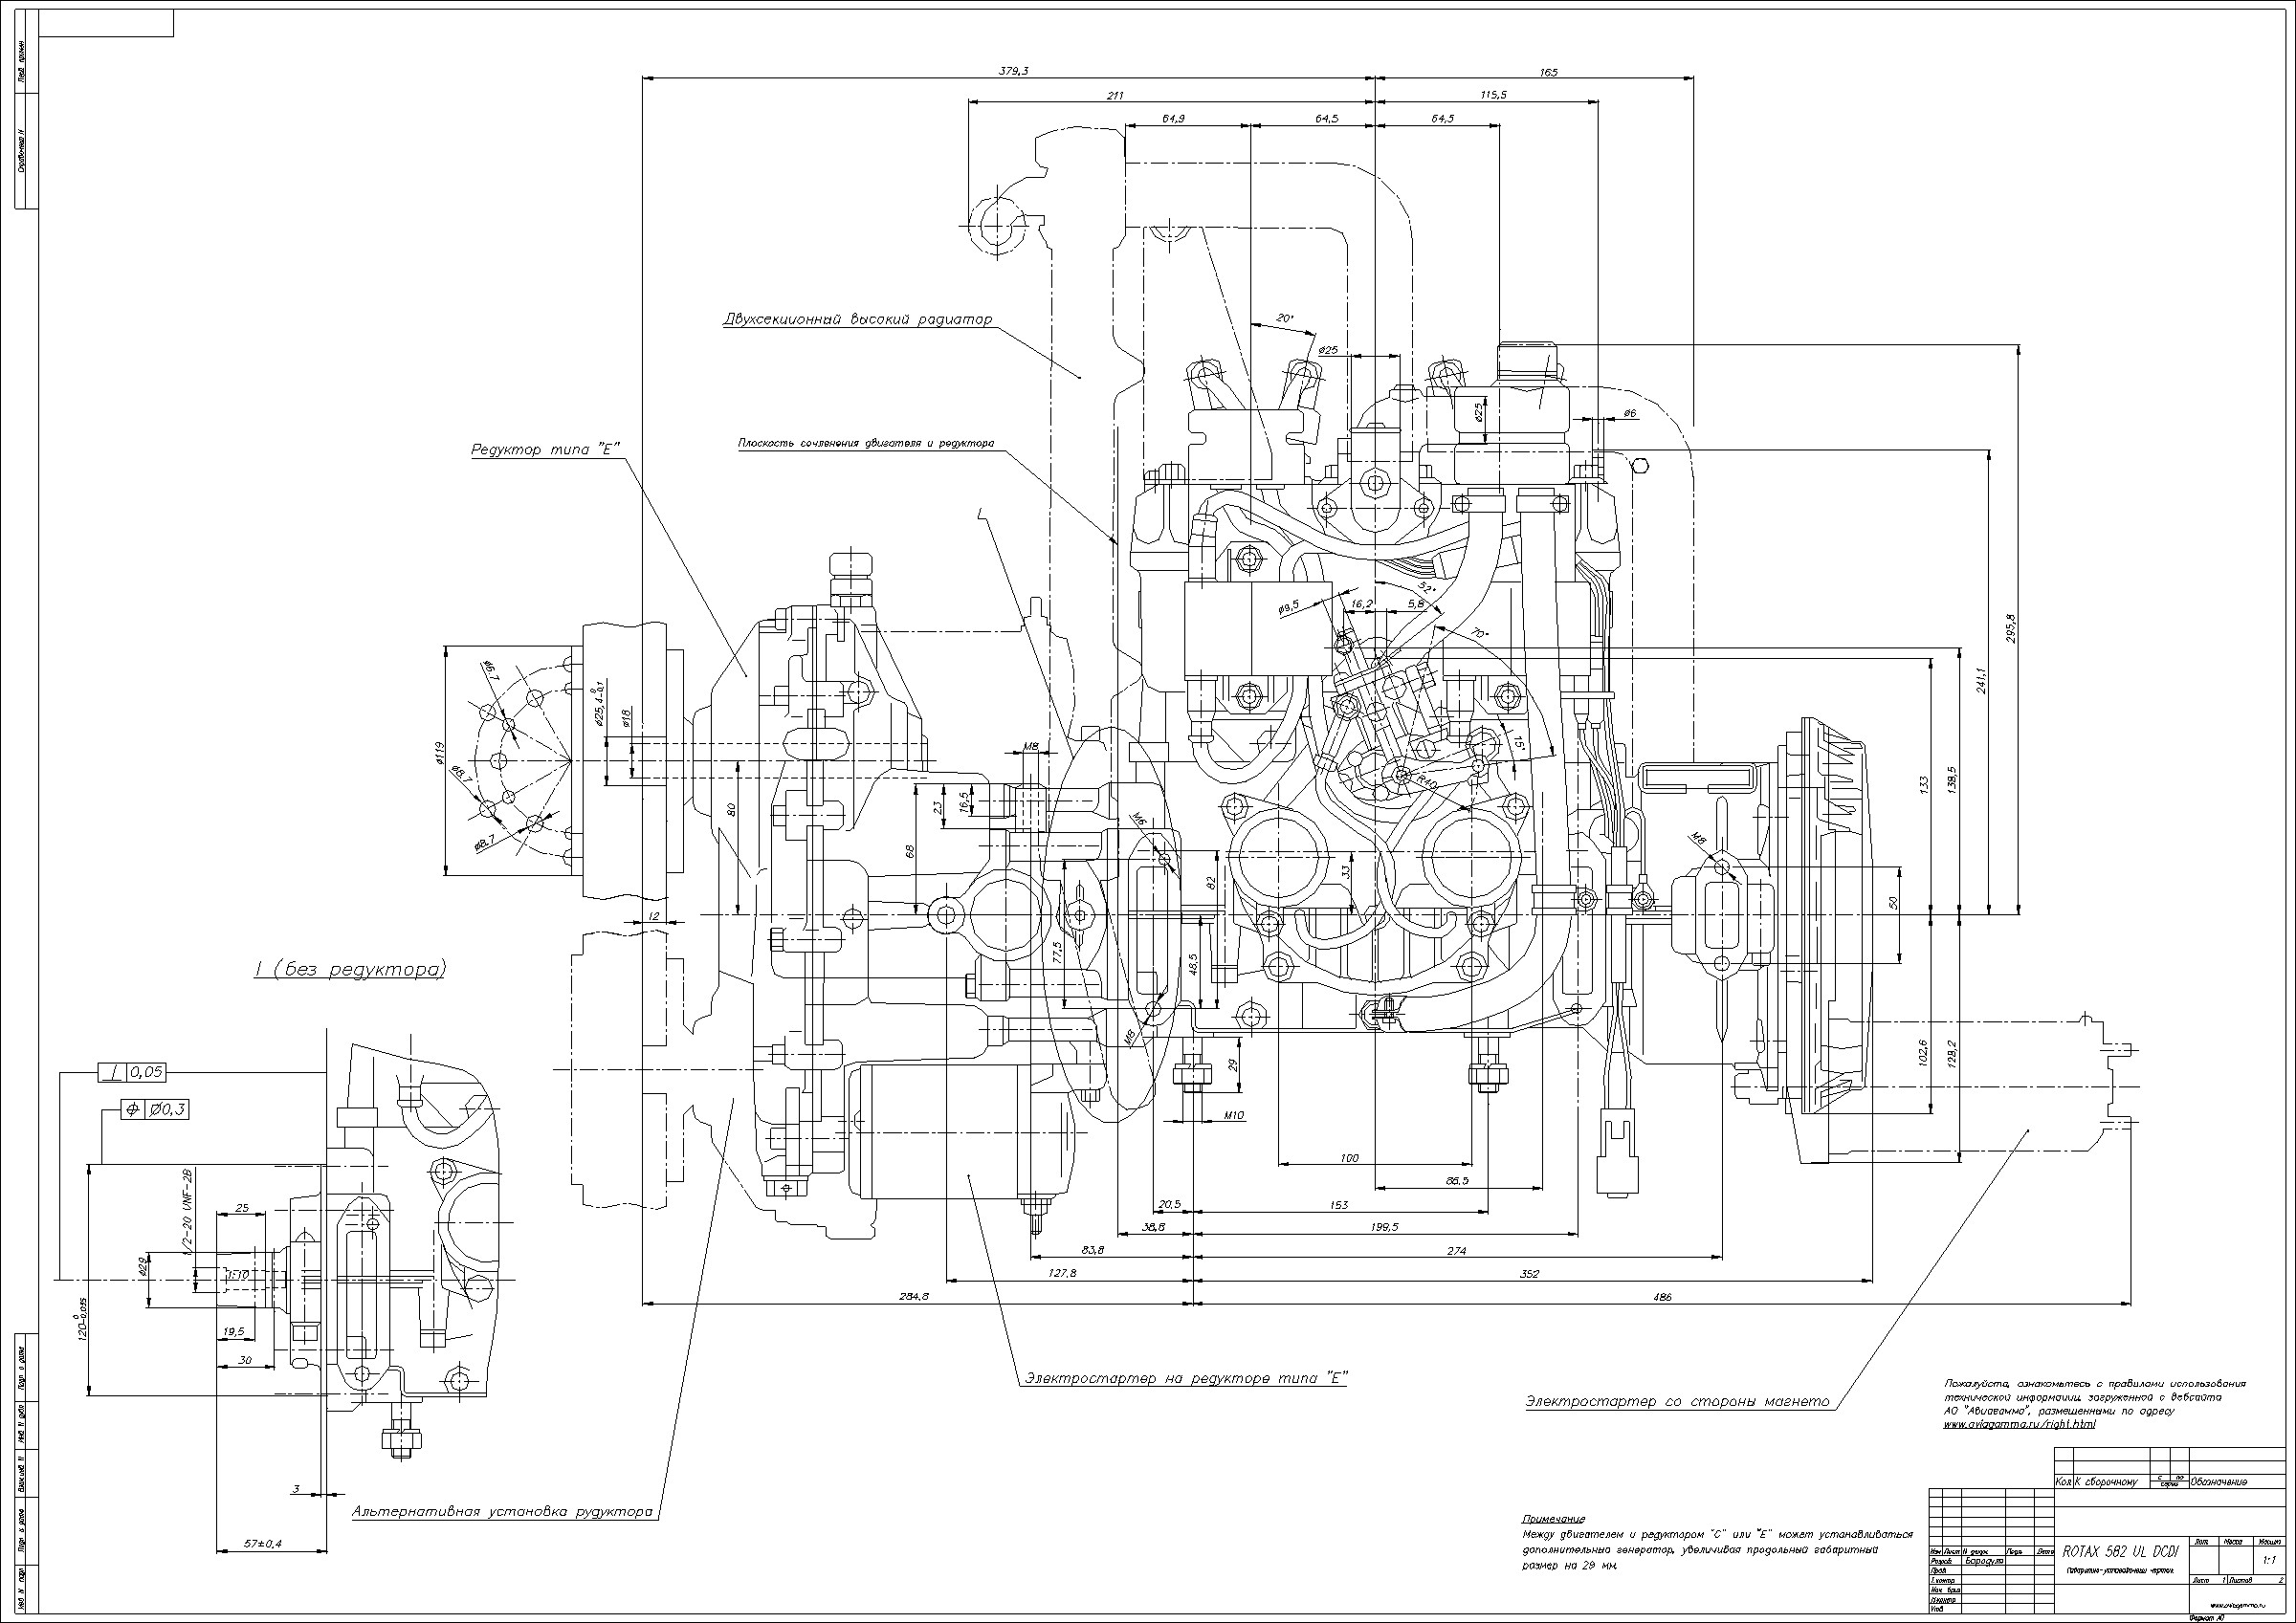 Rotax Engine Diagram Aviagamma Rotax Aircraft Engines Outline Drawings Of Rotax Engine Diagram